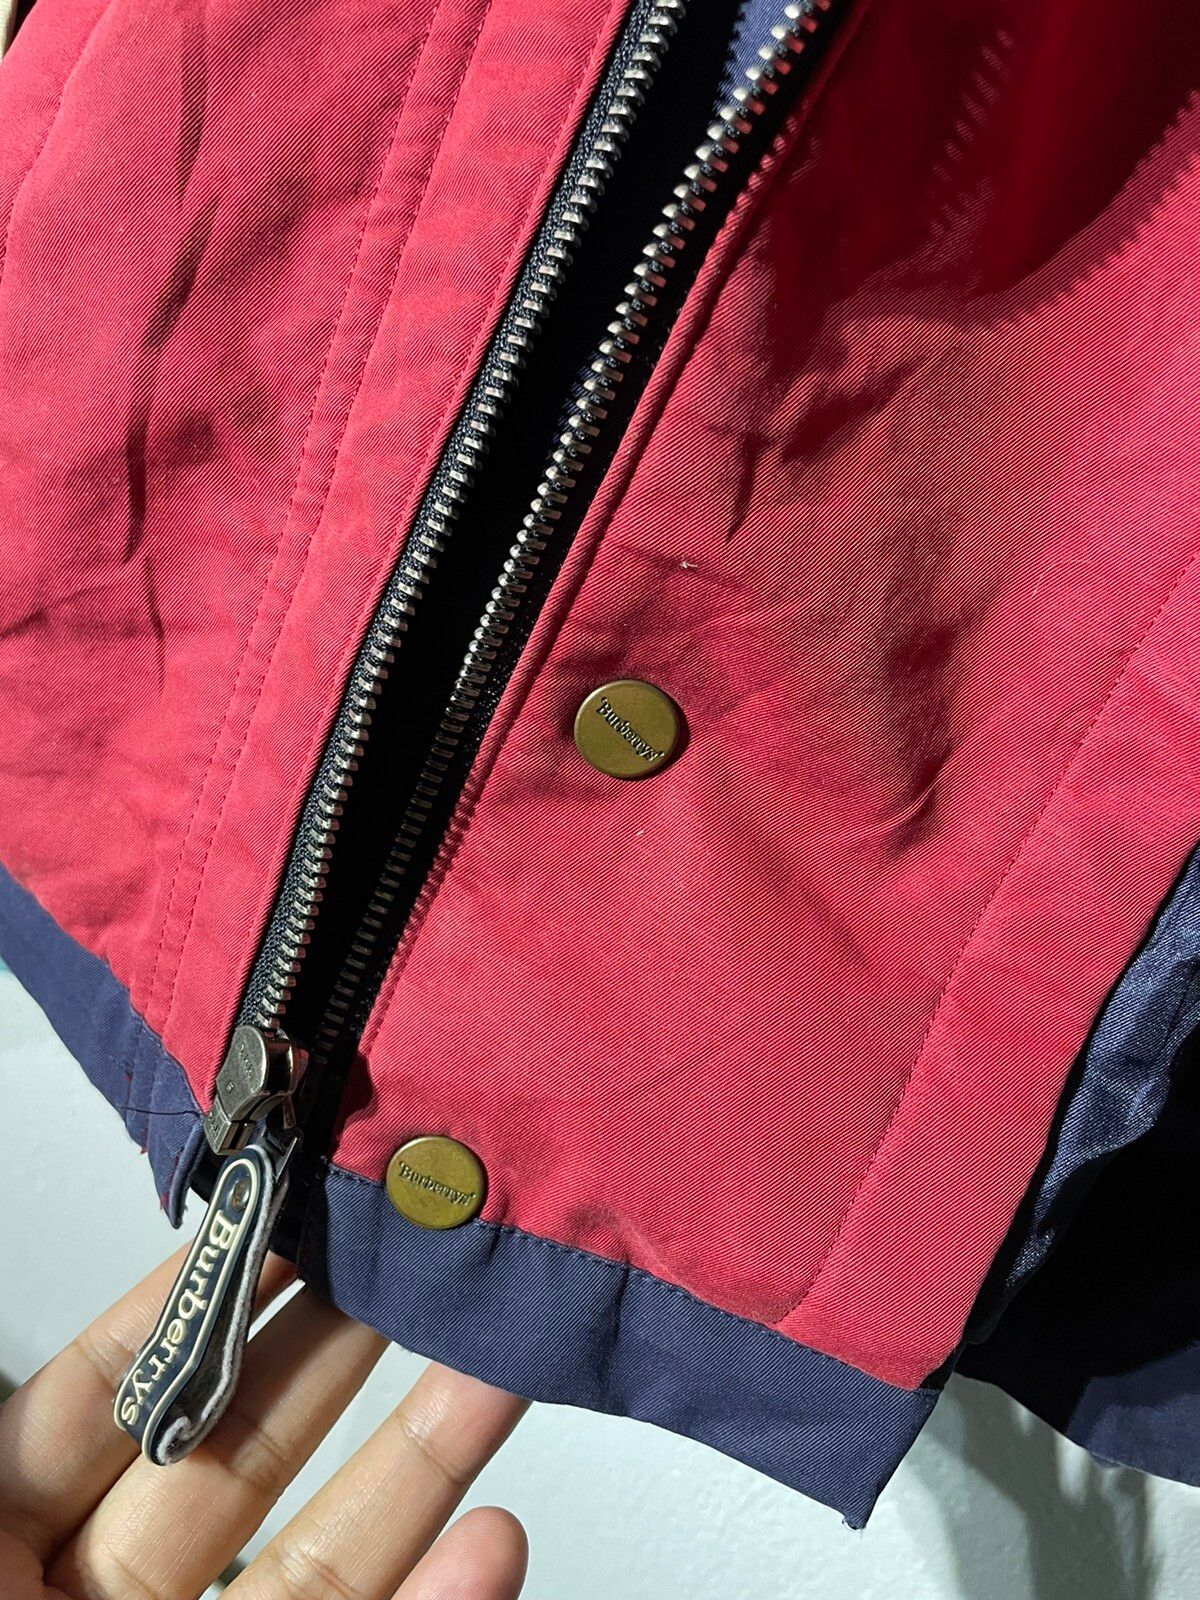 DELETE IN 24h‼️ Burberry reversible big logo jacket - 3